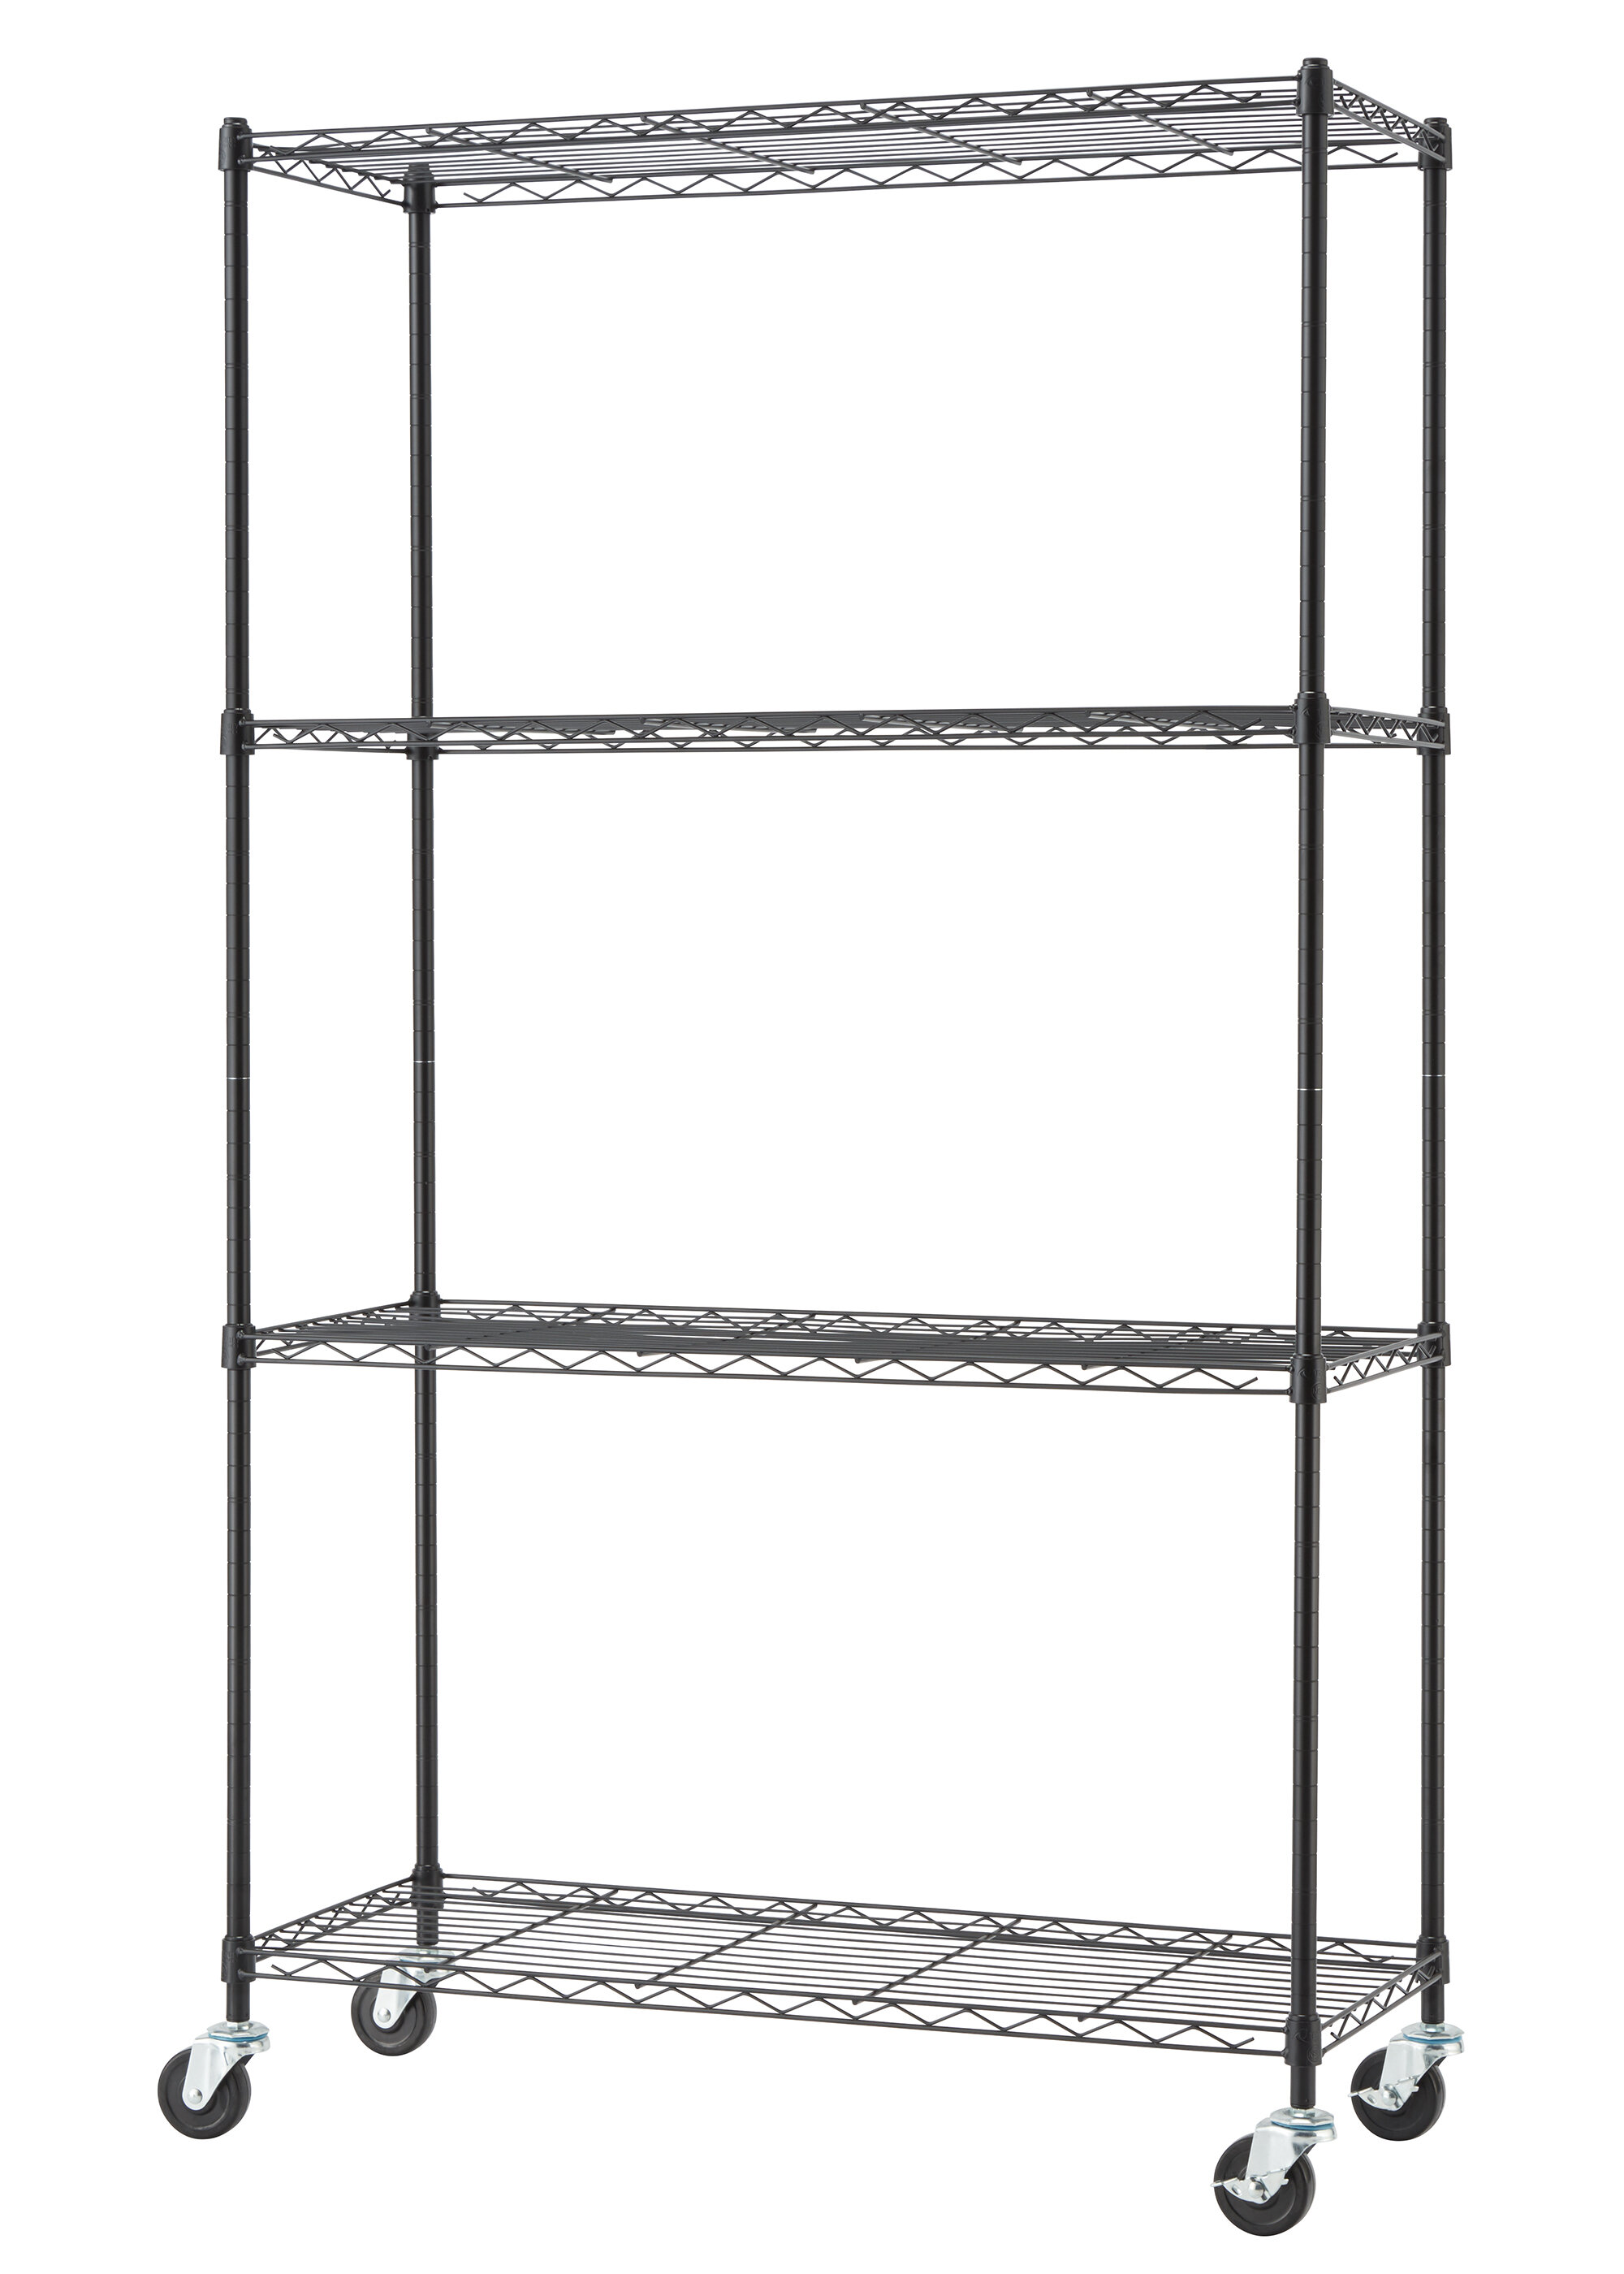 Details about   Devo 6-Shelf Adjustable Height Storage Shelf Standing Organizer Shelf B s a e 69 